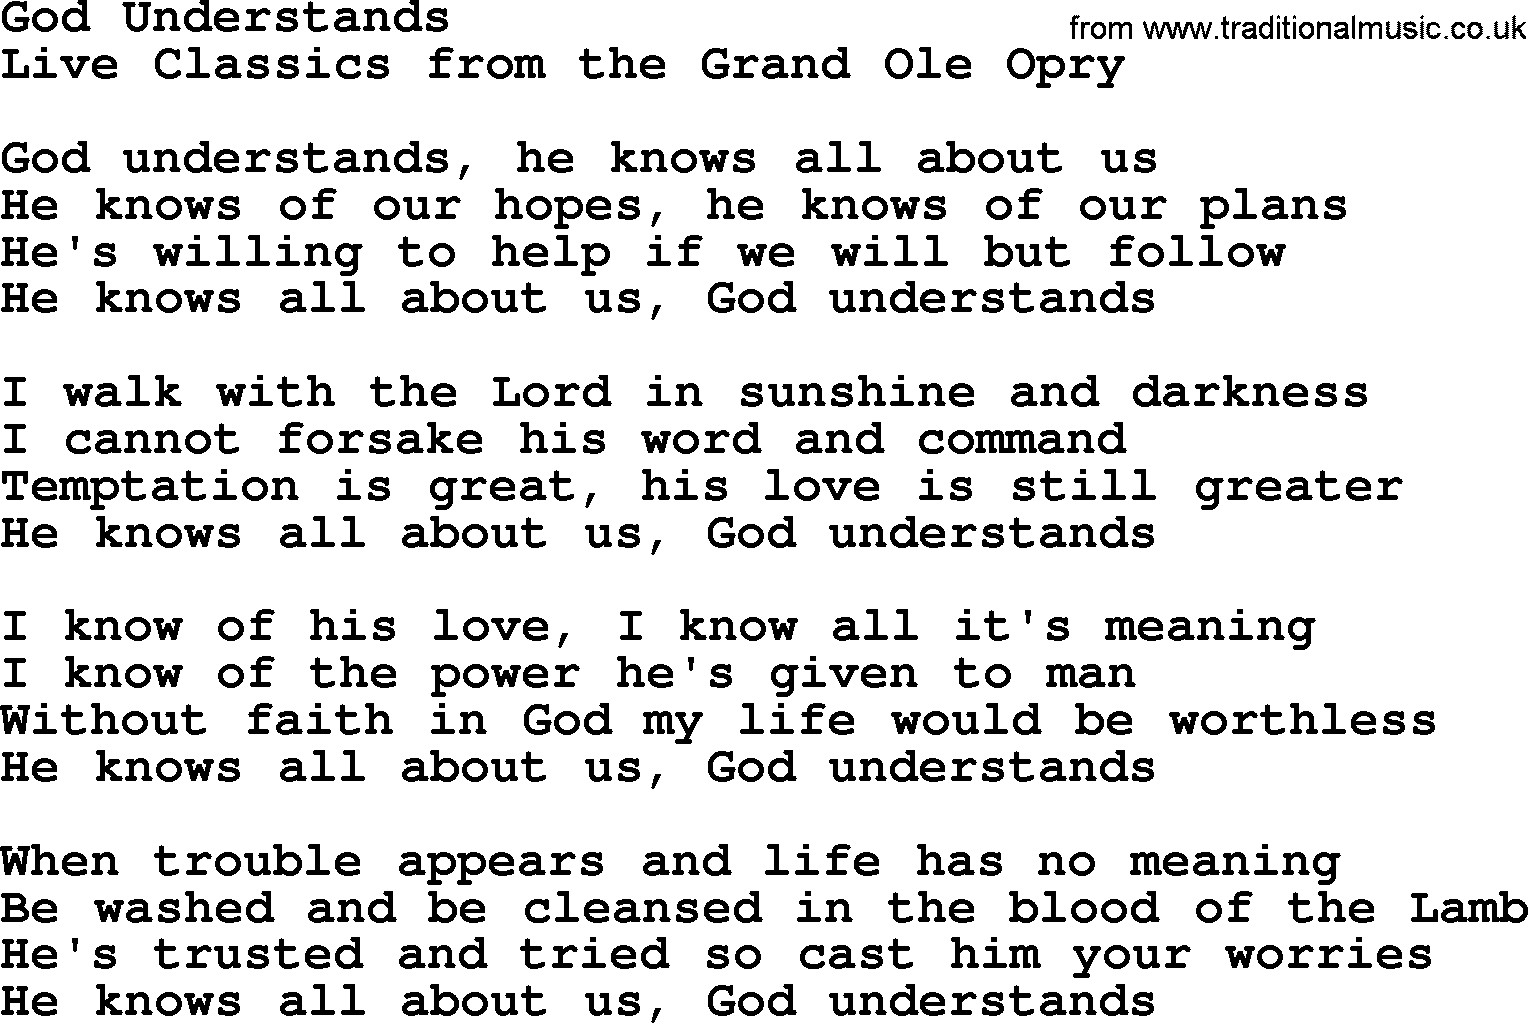 Marty Robbins song: God Understands, lyrics